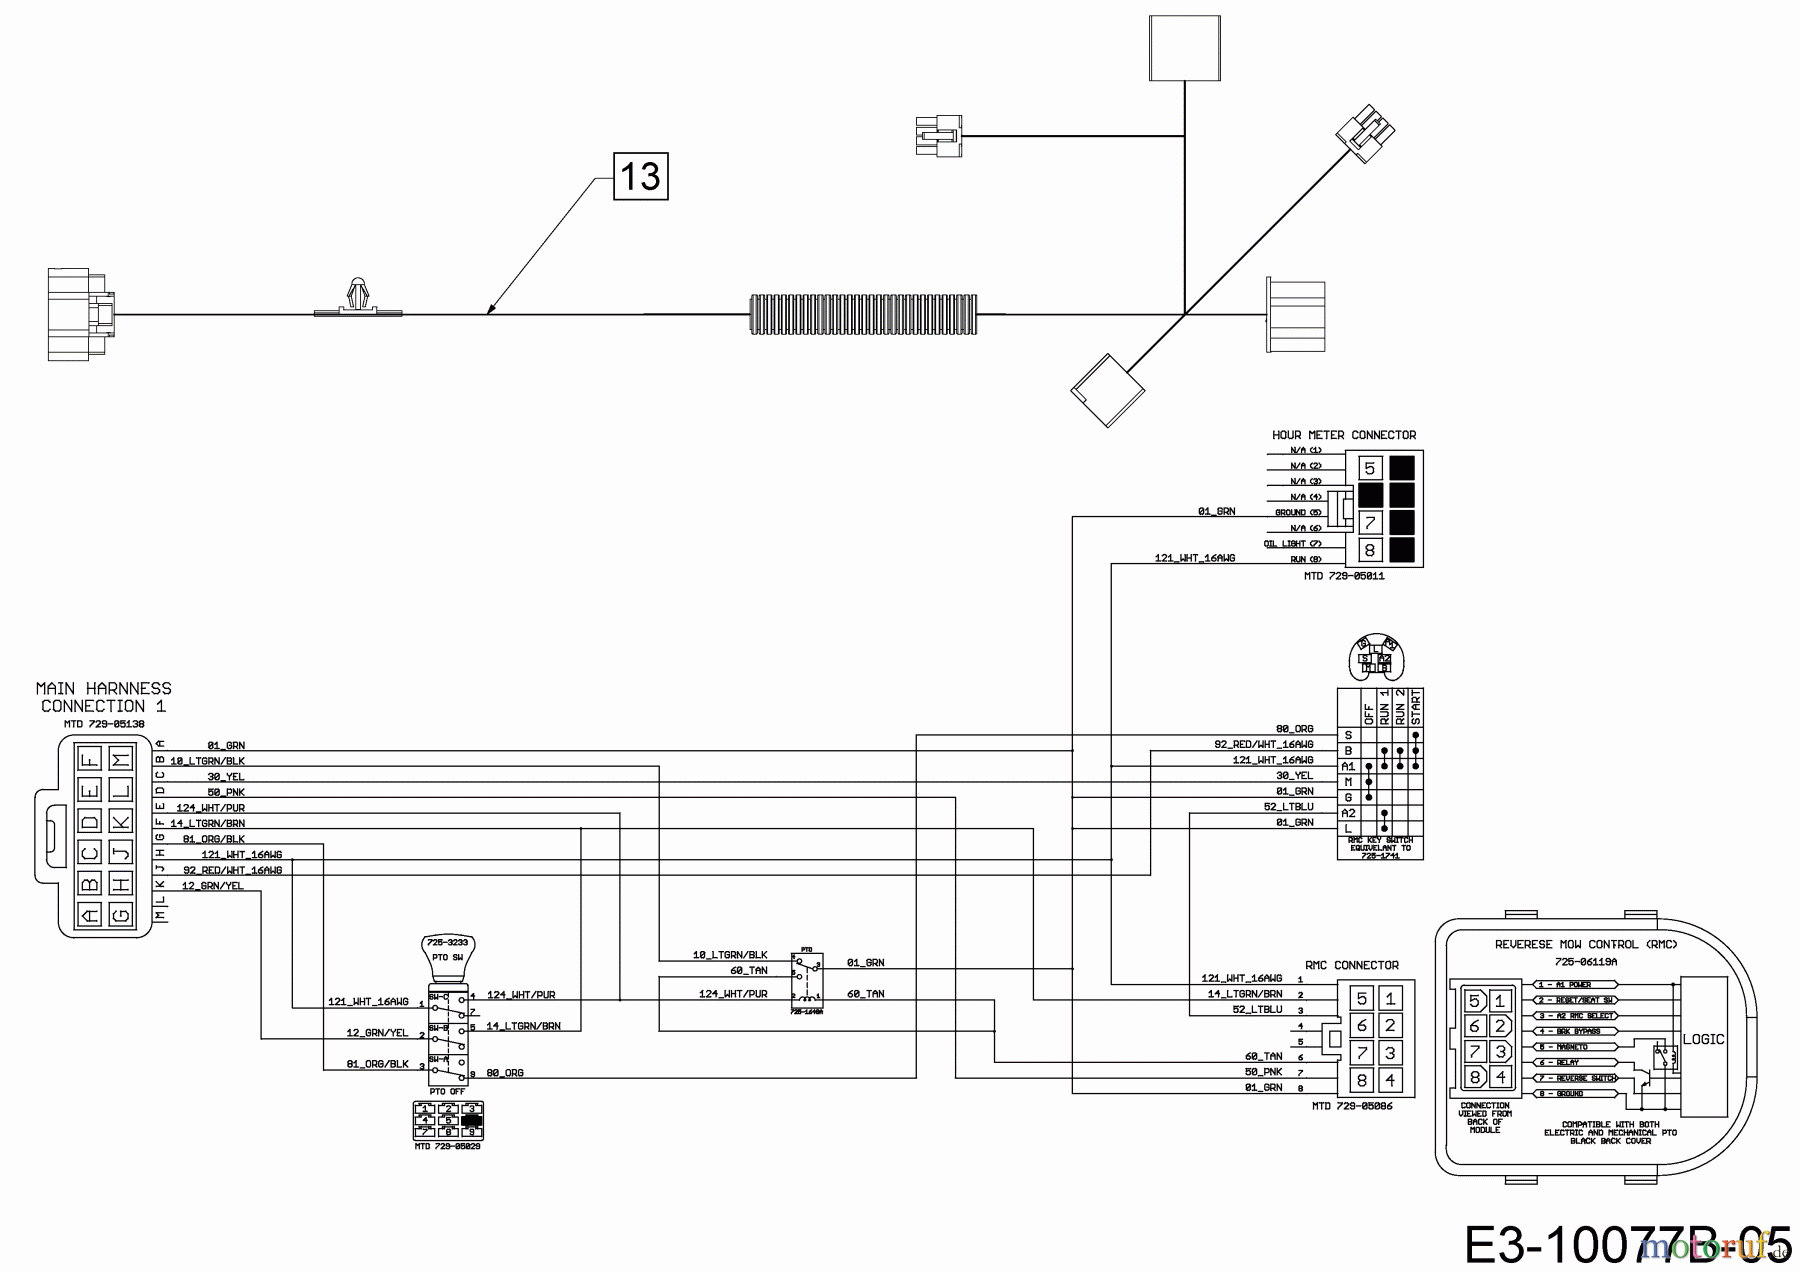  Black Edition Lawn tractors 275-106 TWIN H 13BAA1KR615  (2019) Wiring diagram dashboard